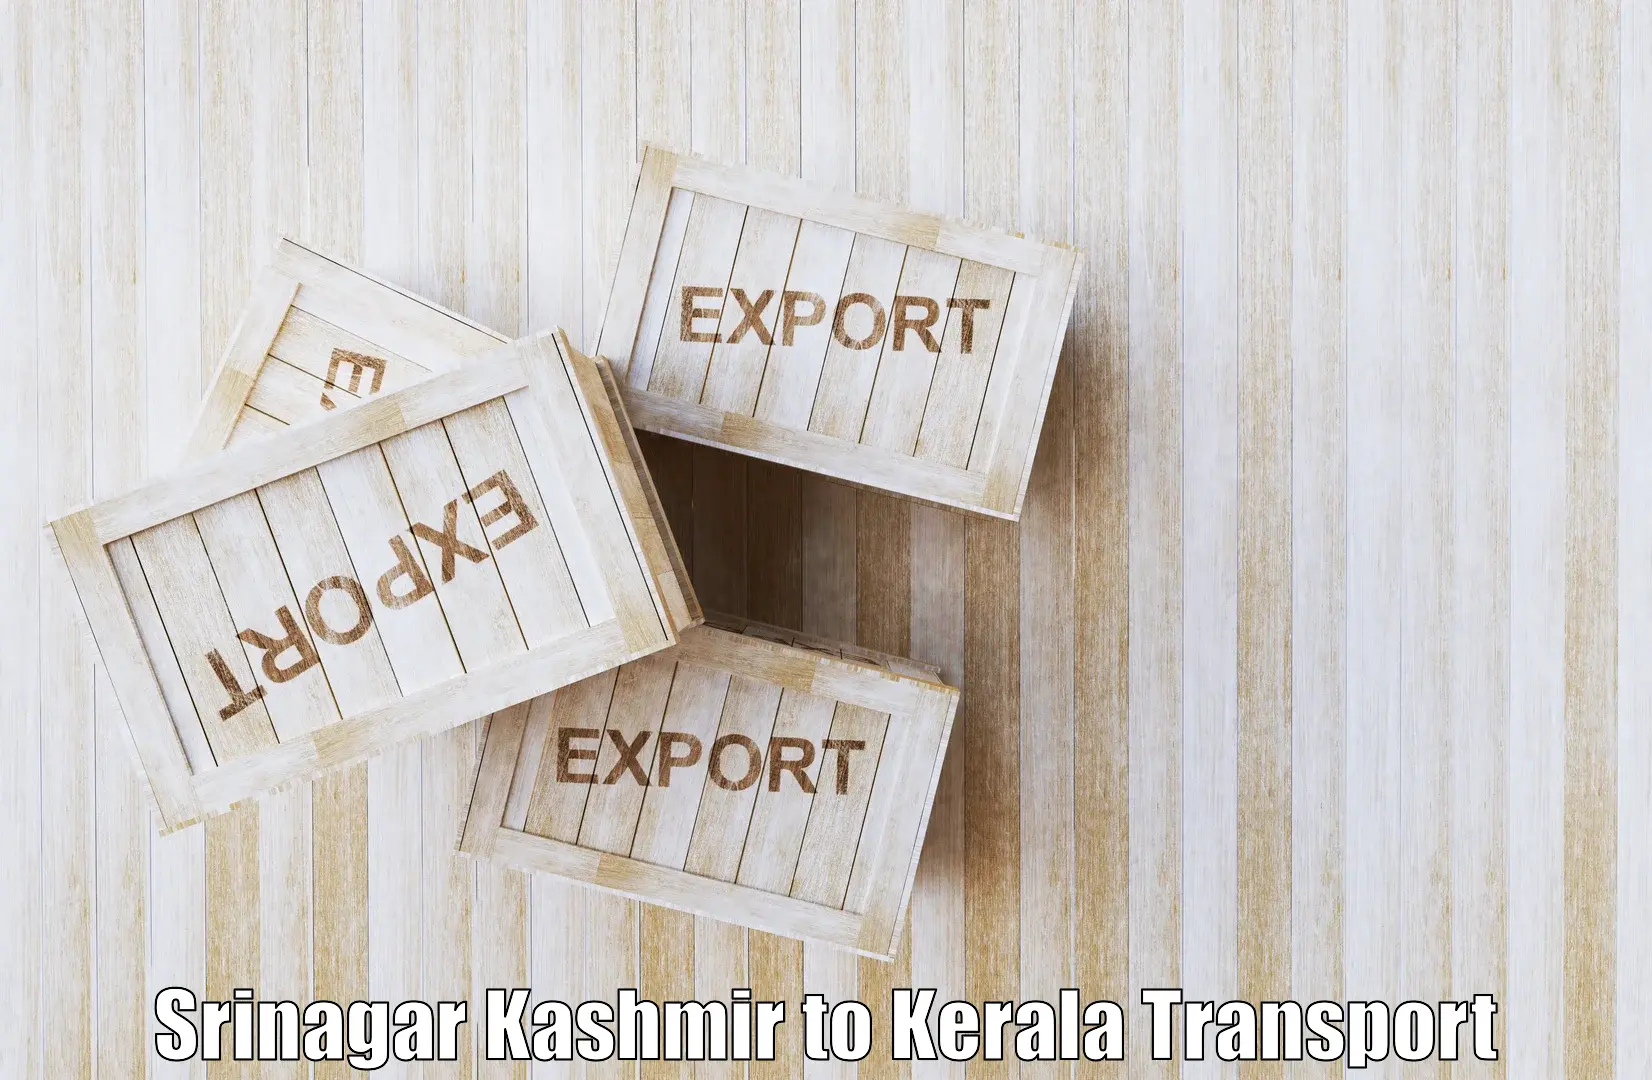 Nearby transport service Srinagar Kashmir to Hosdurg